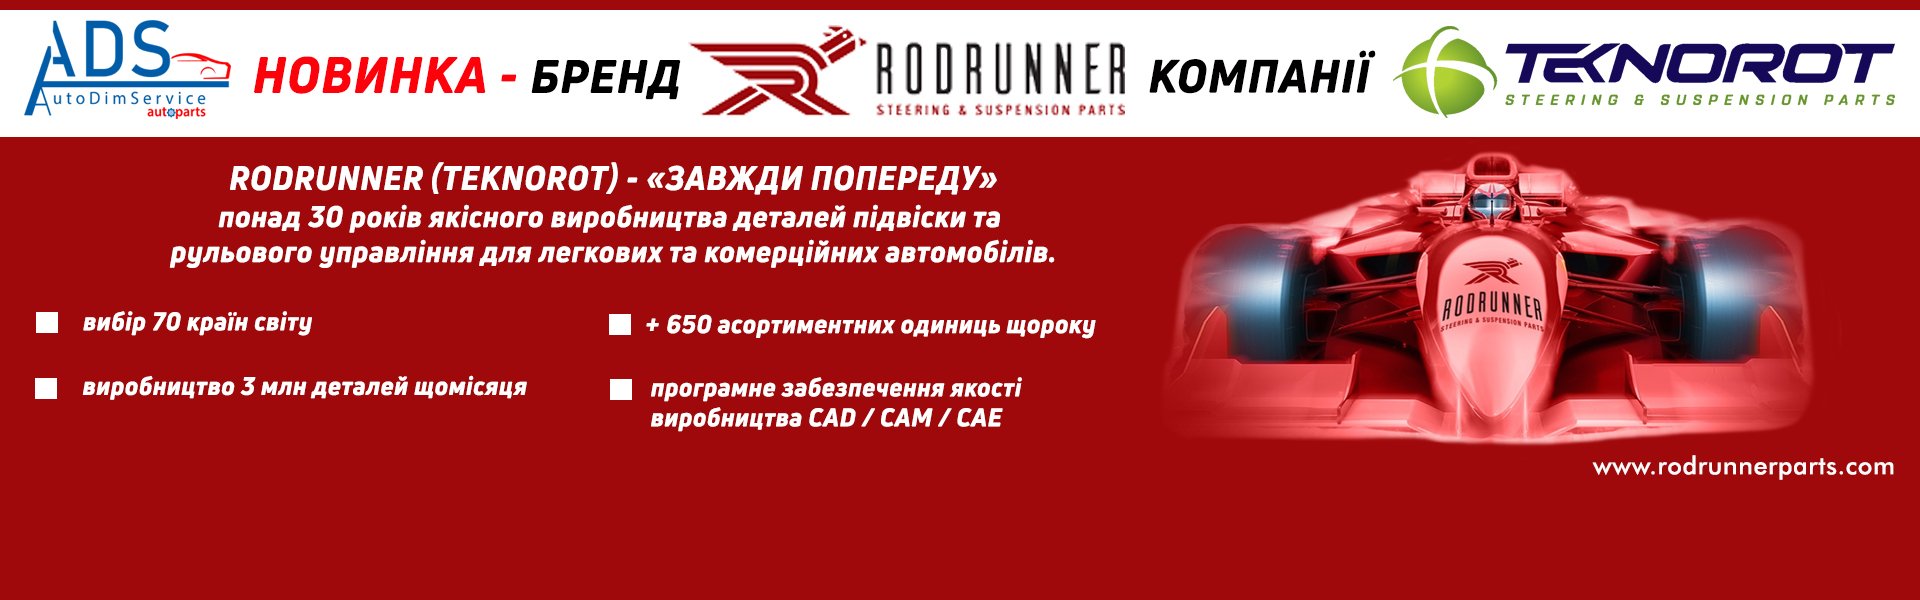 Новинка - бренд RODRUNNER (TEKNOROT)